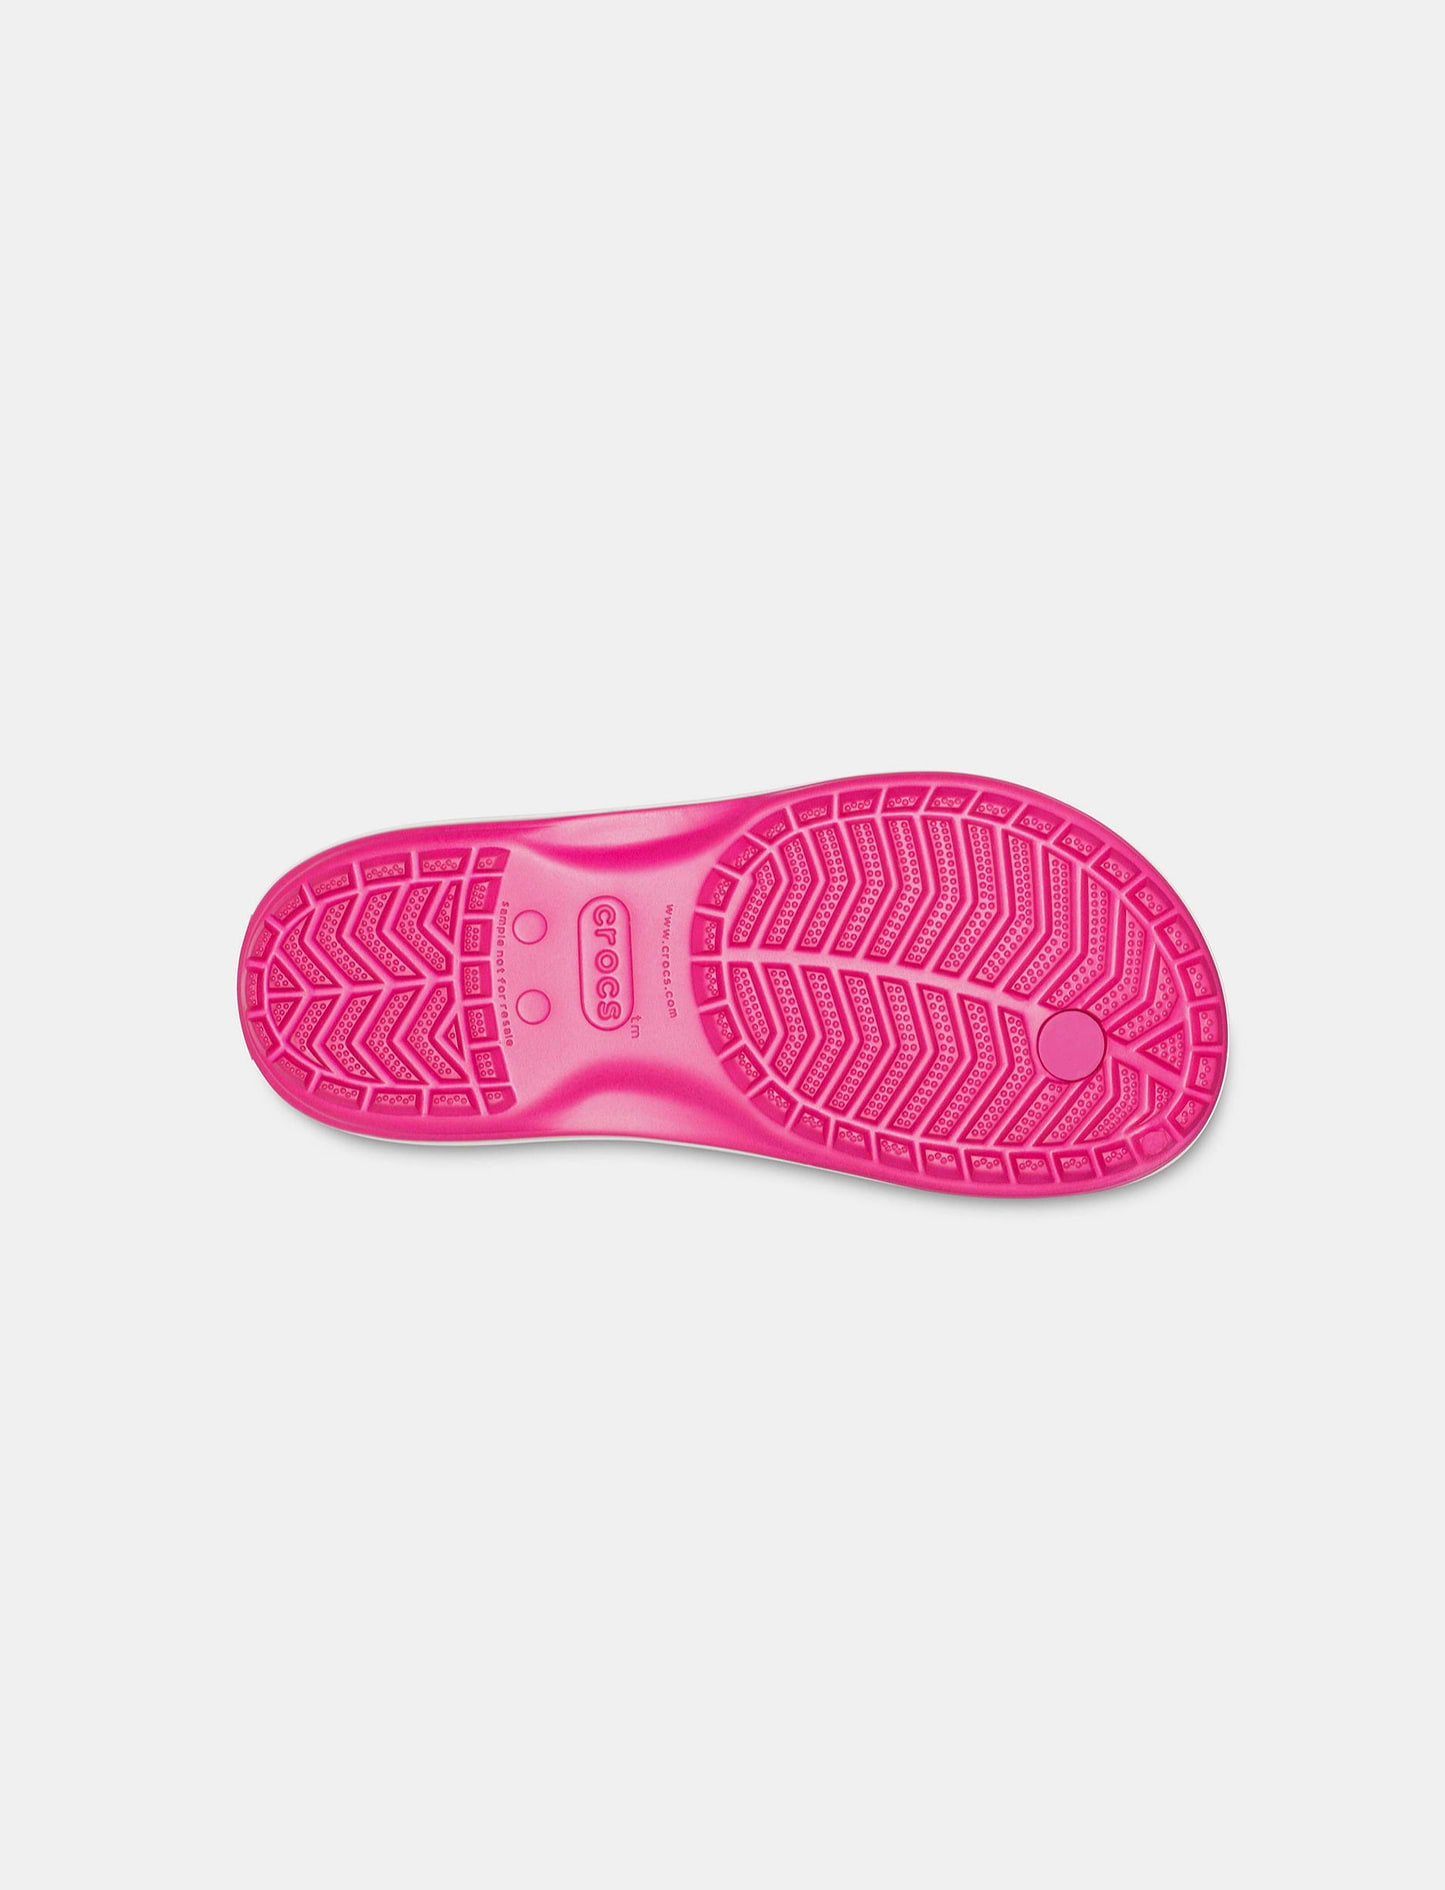 Crocs Crocband Flip GS - נעלי אצבע לילדים קרוקס קרוקבנד